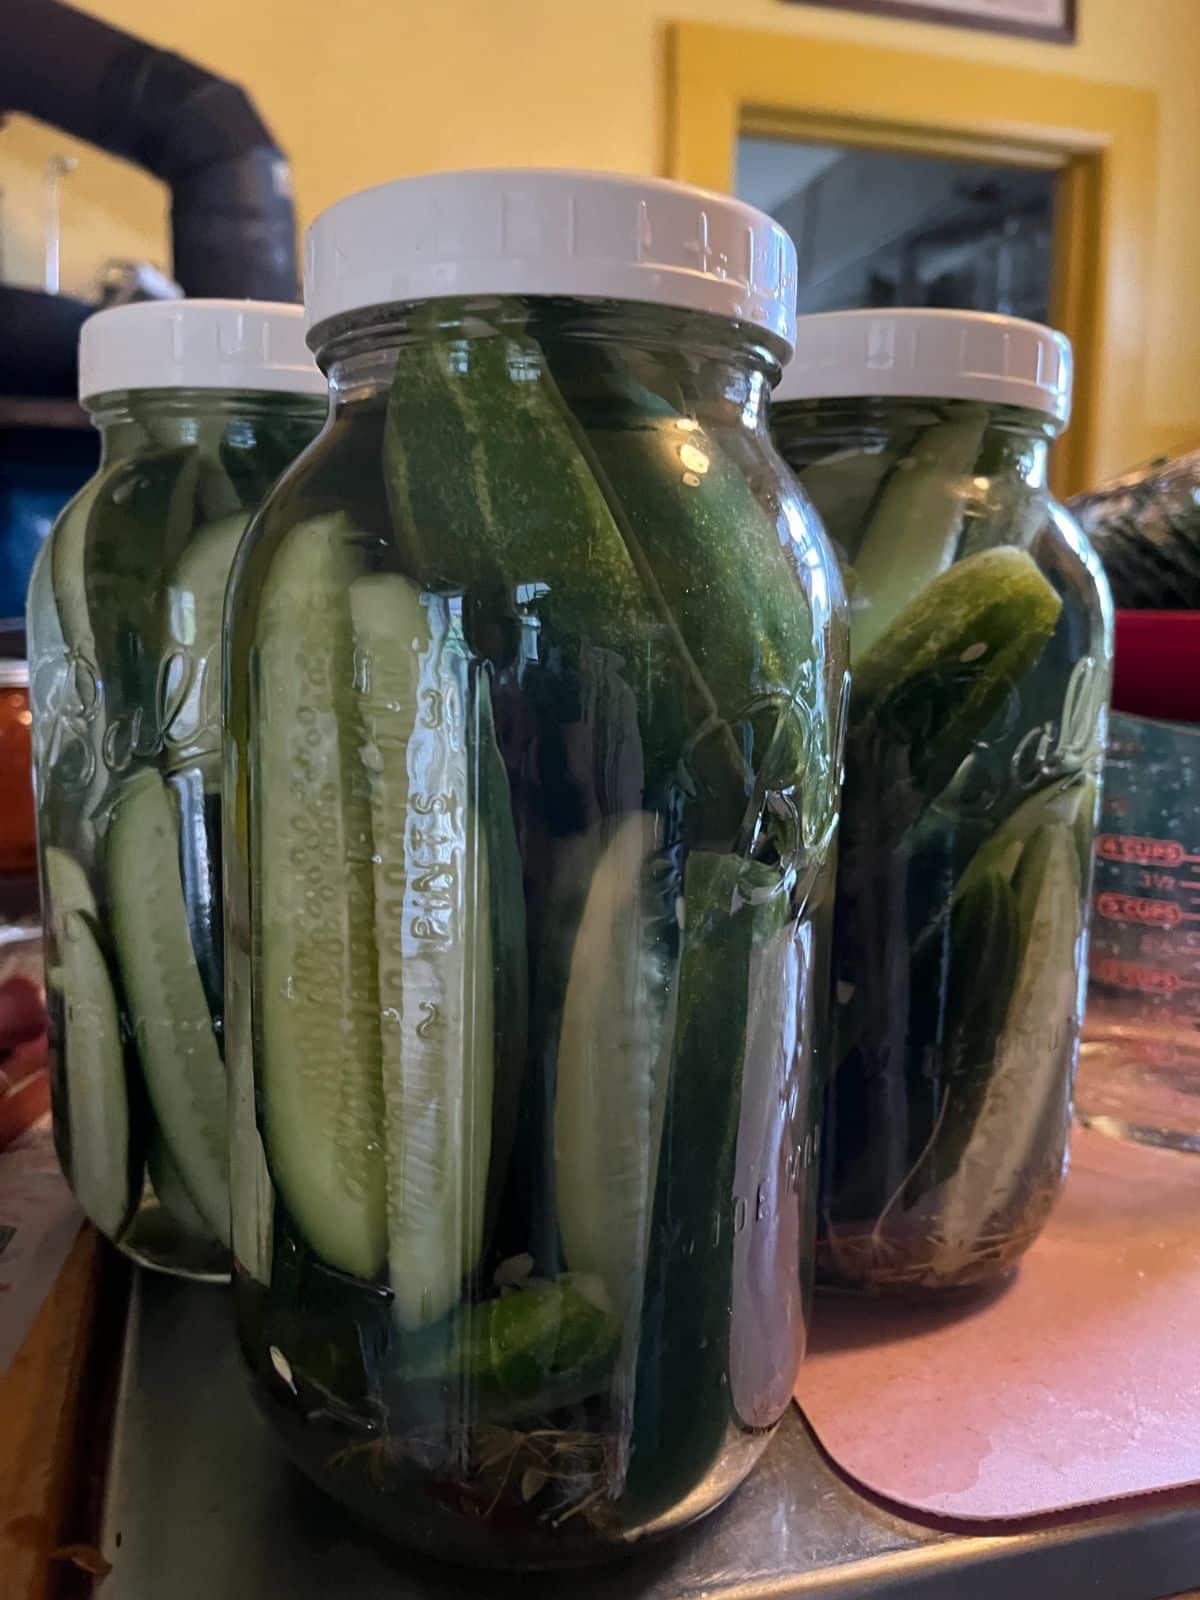 Pickles in large half gallon jars